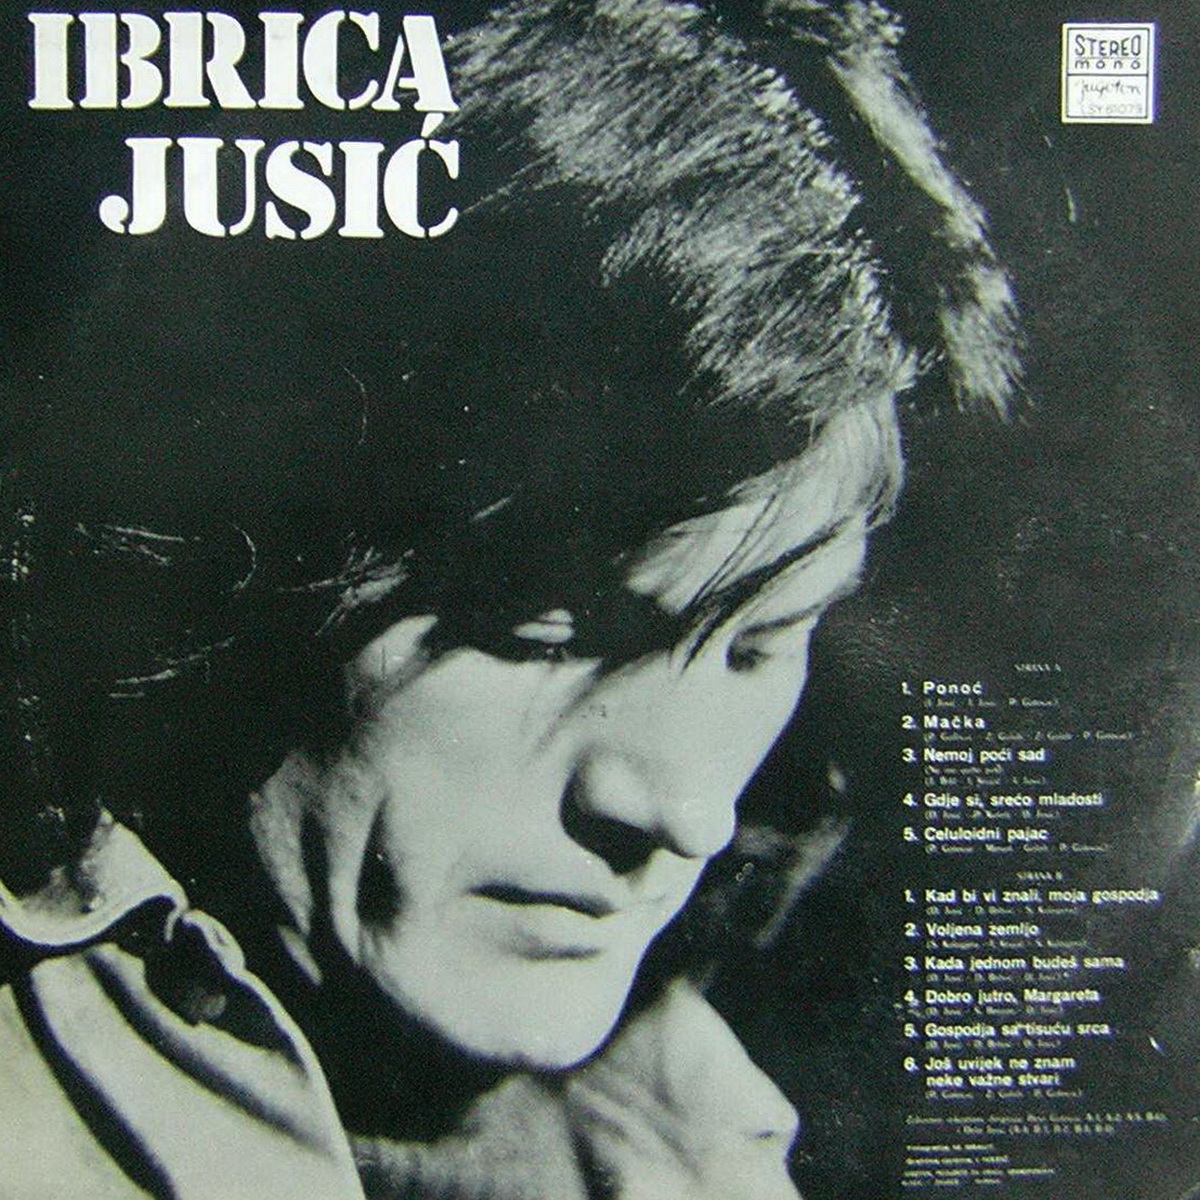 Ibrica Jusic 1974 Ibrica Jusic b